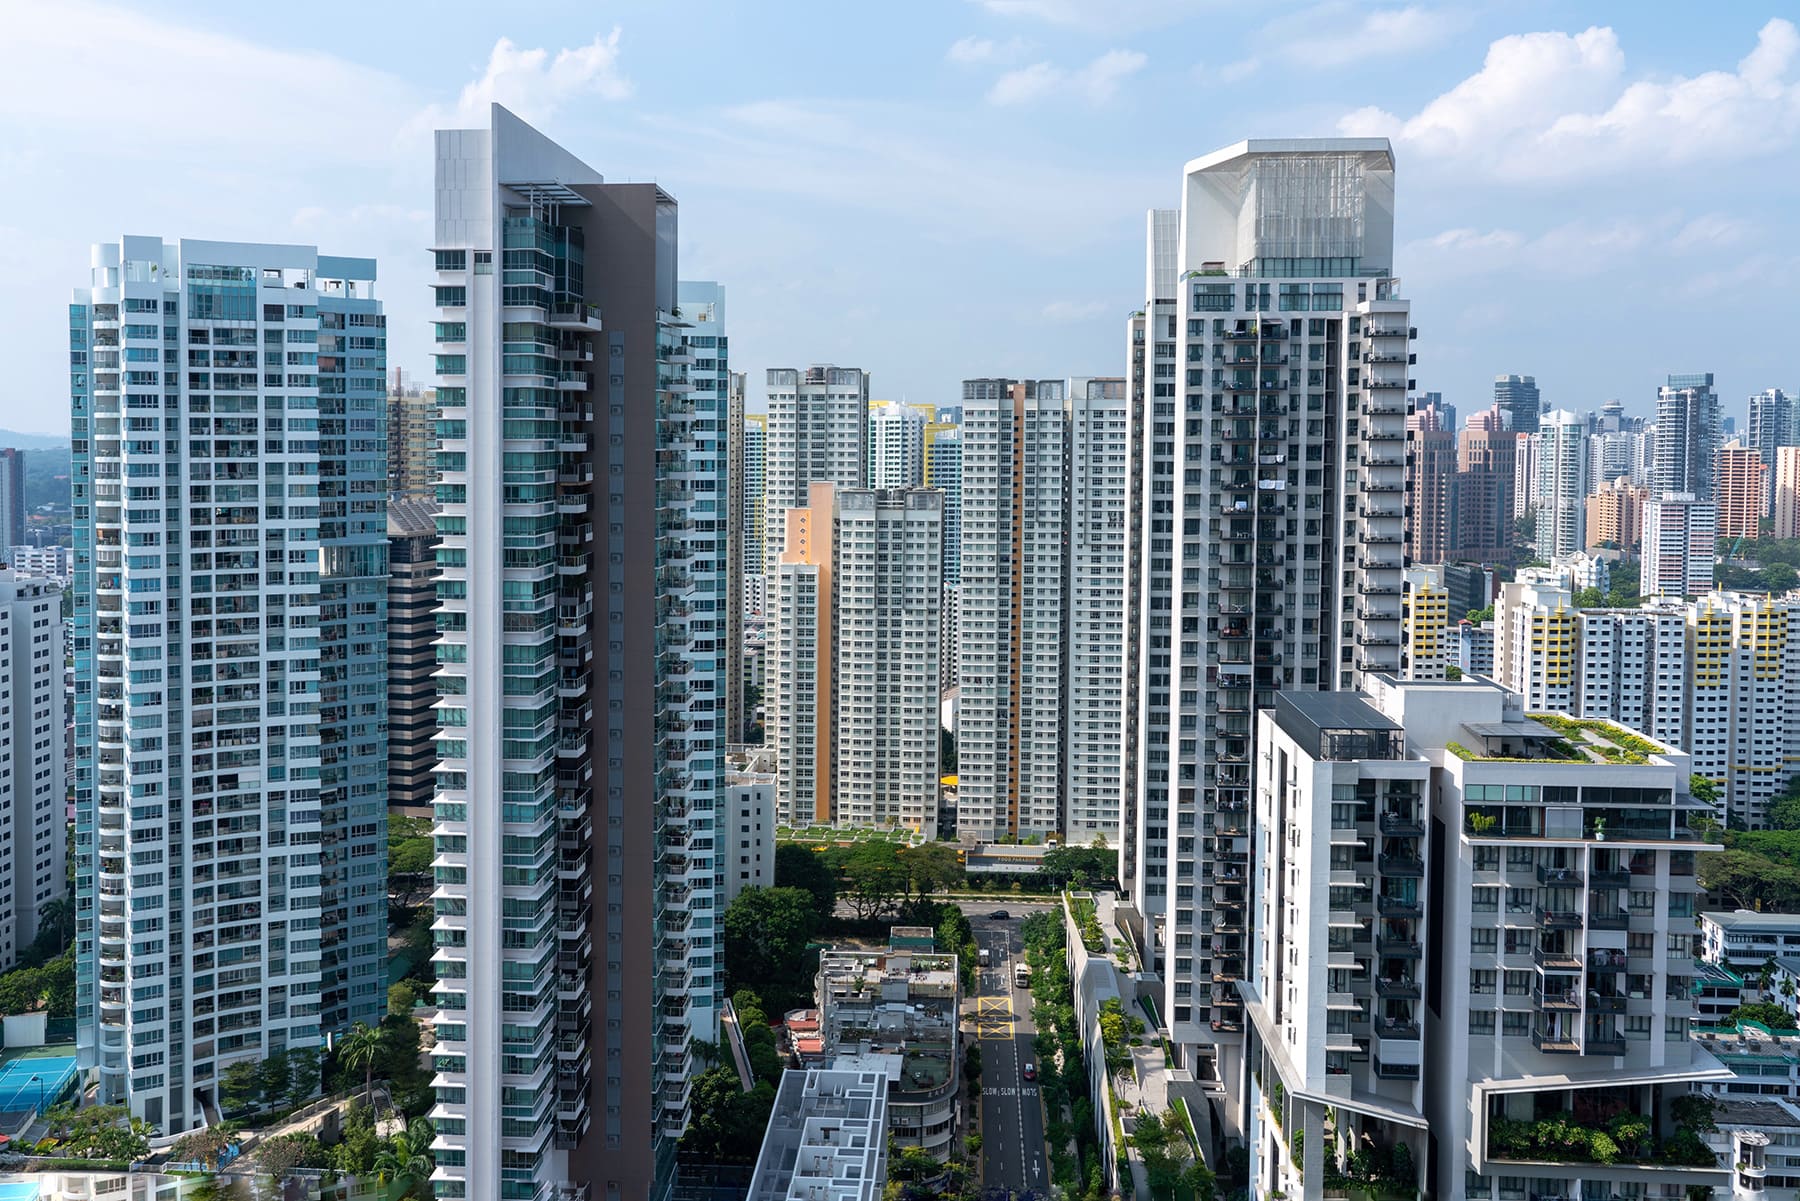 HDB housing in Singapore - SGIP